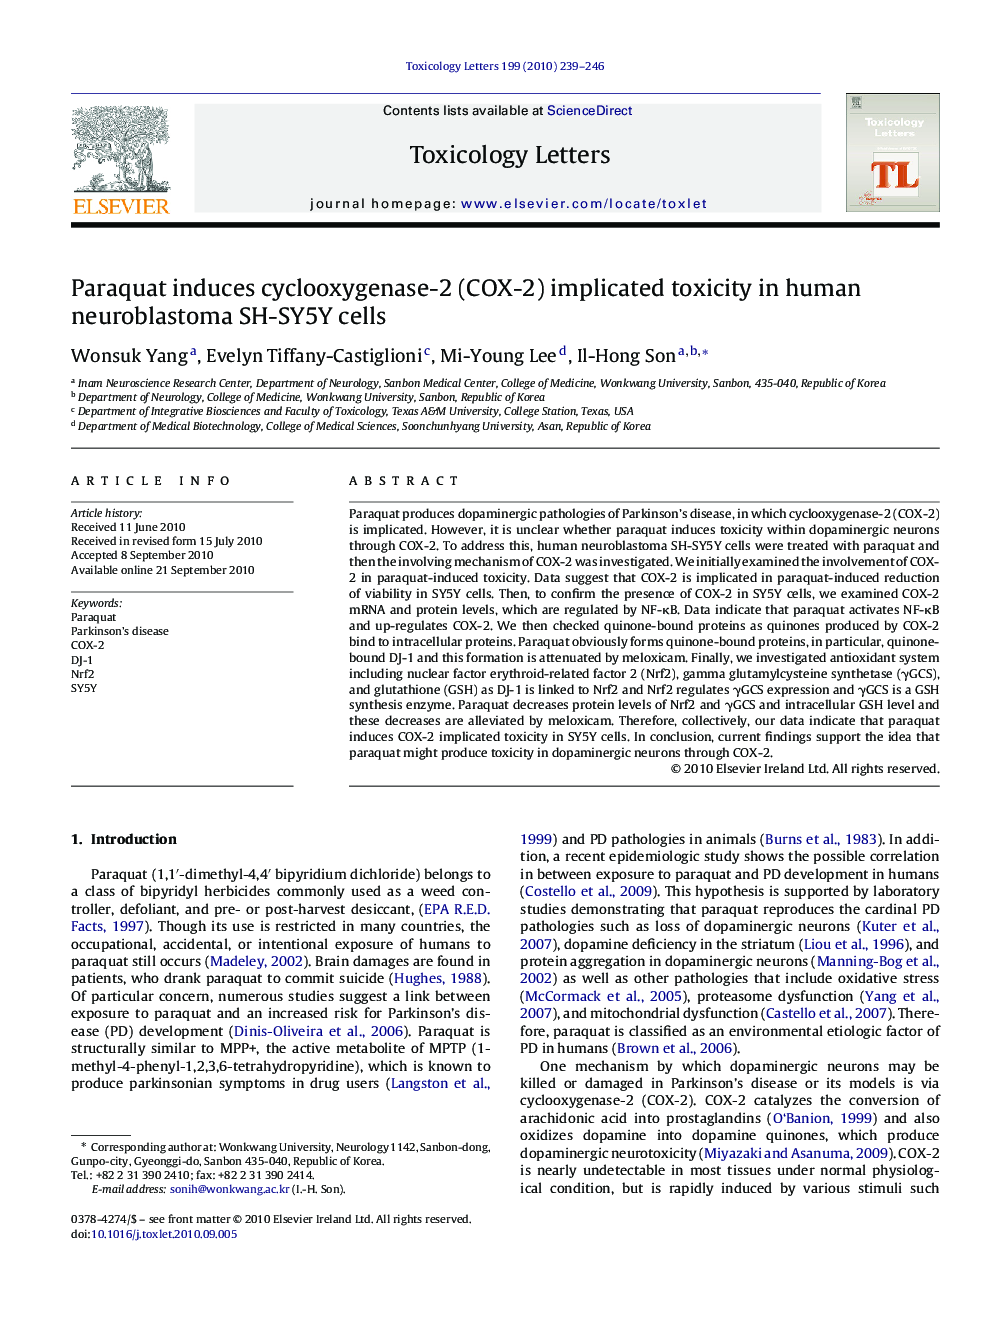 Paraquat induces cyclooxygenase-2 (COX-2) implicated toxicity in human neuroblastoma SH-SY5Y cells